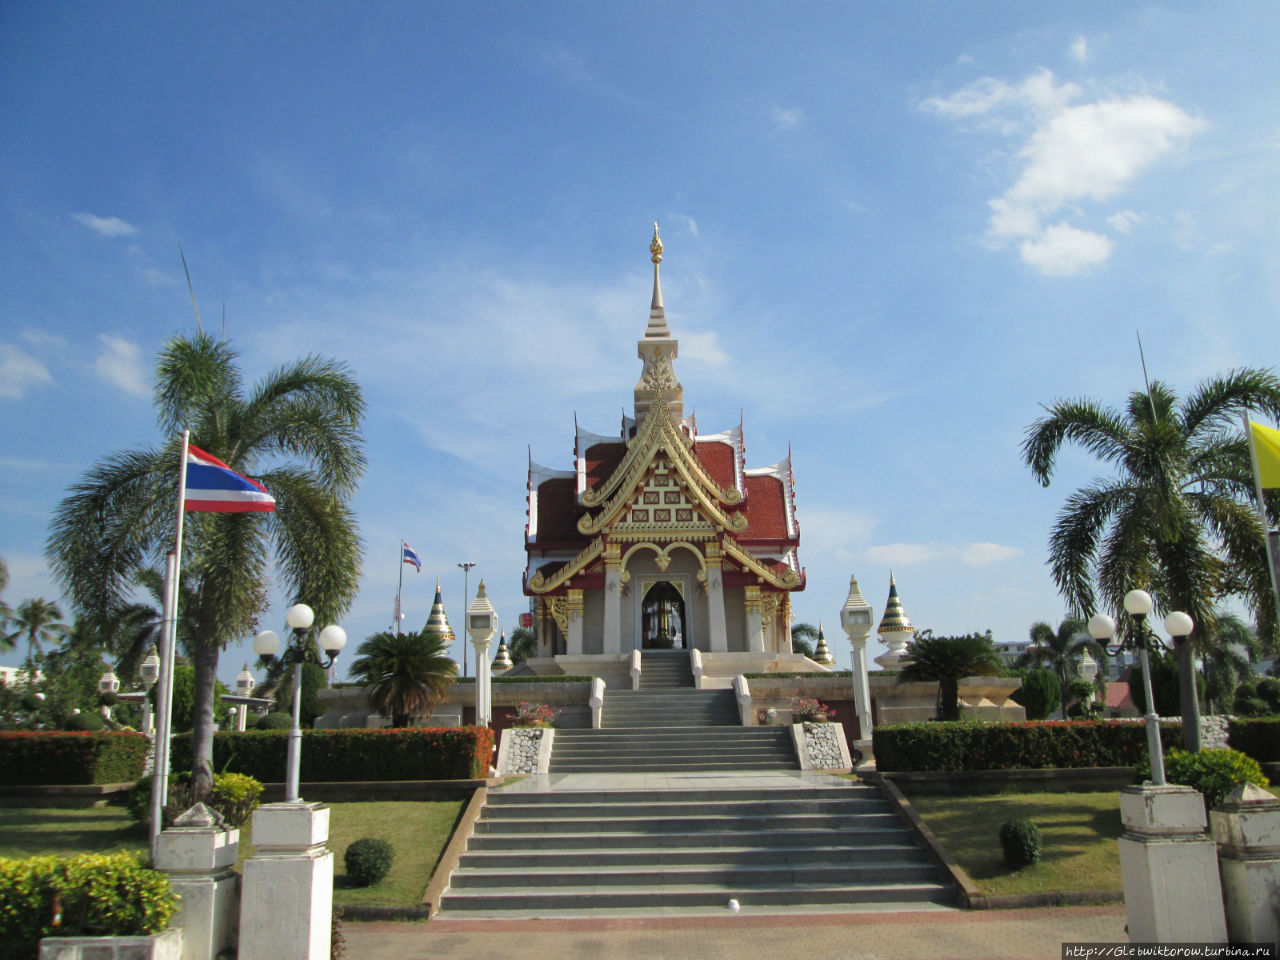 Прогулка по центральной площади города Удон-Тани, Таиланд